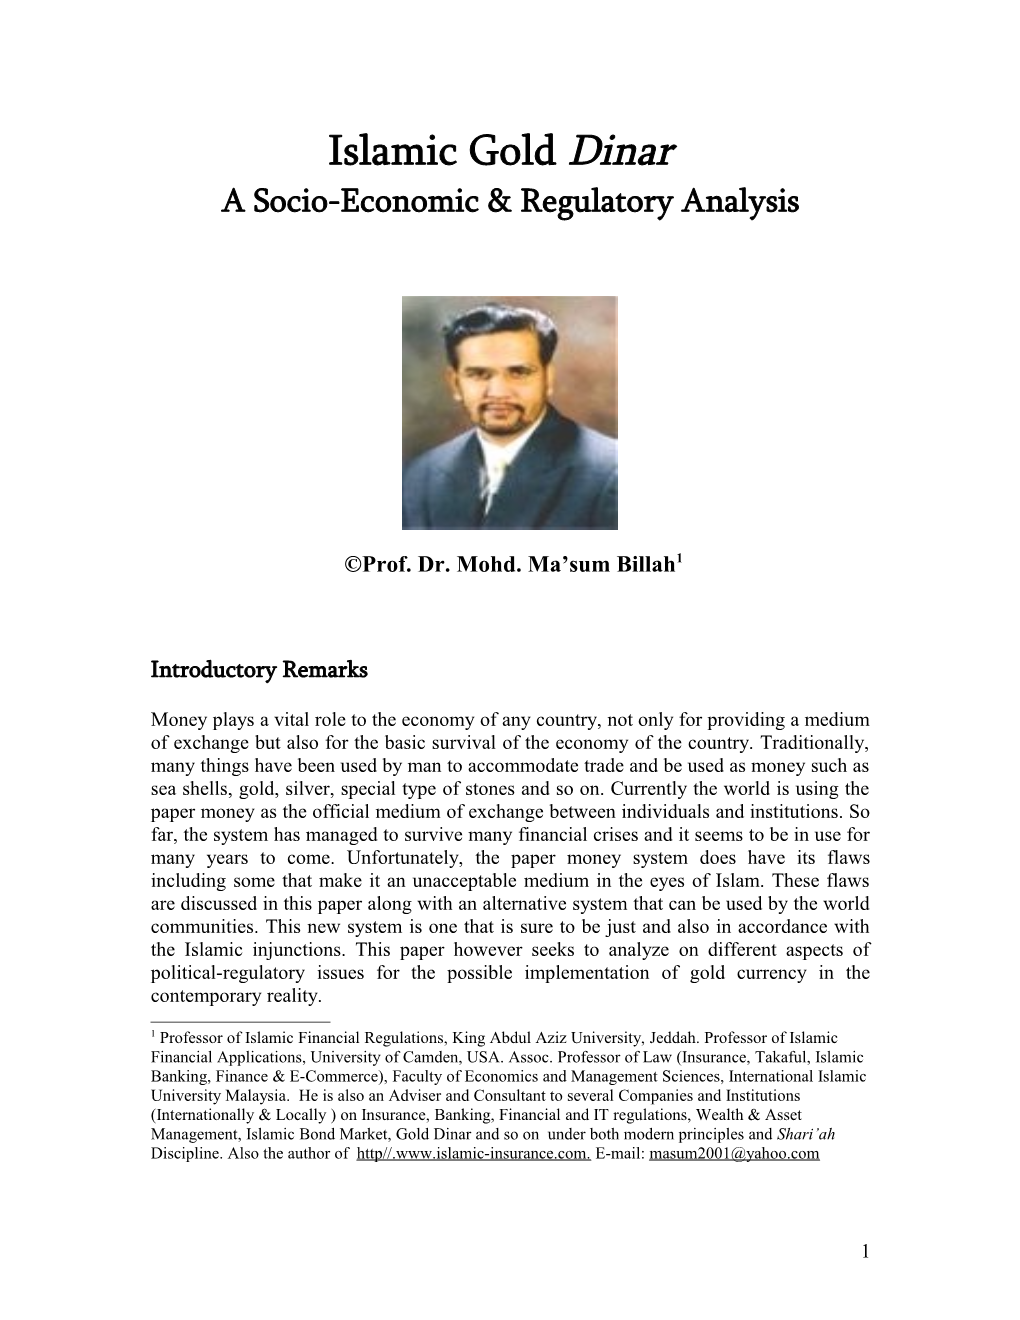 A Socio-Economic & Regulatory Analysis